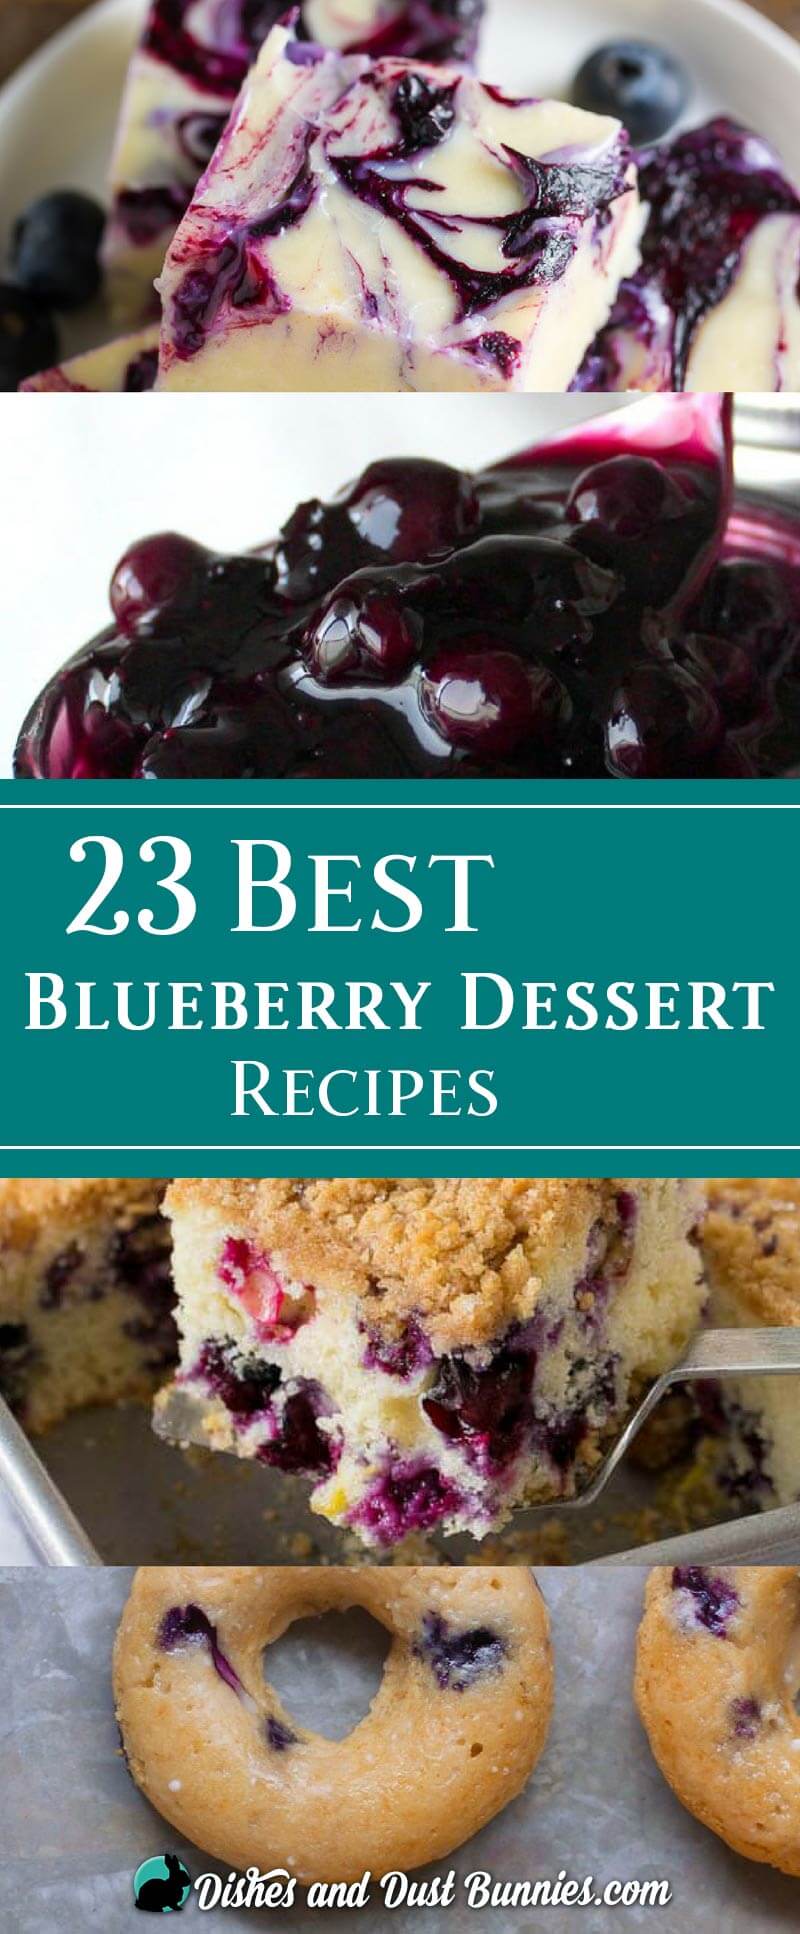 23 Best Blueberry Dessert Recipes - dishesanddustbunnies.com